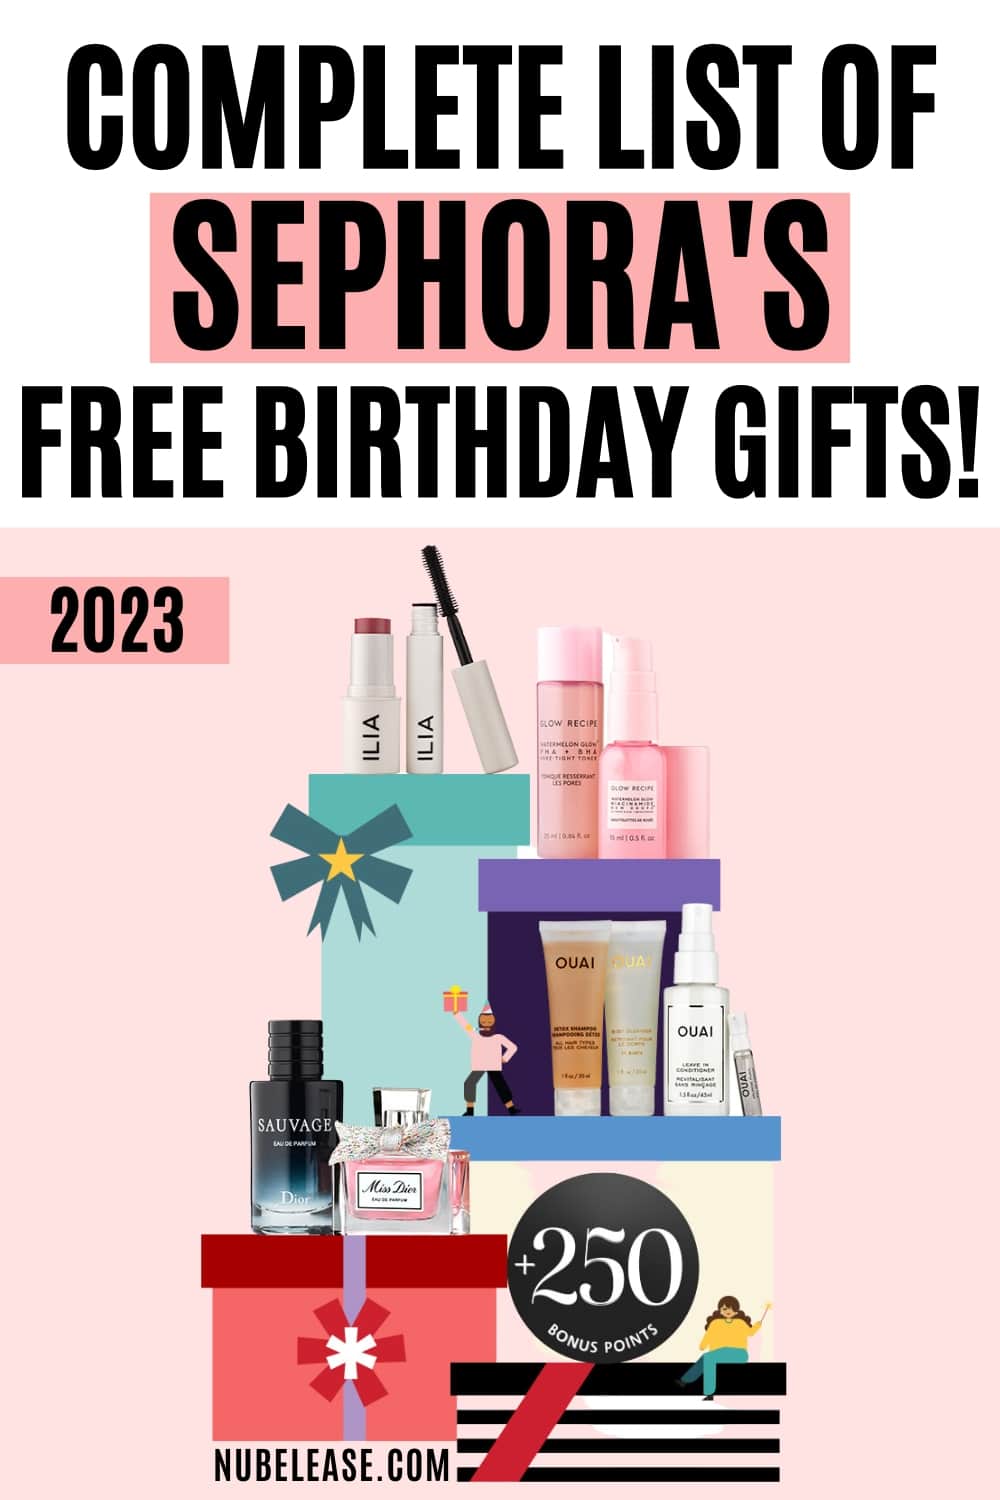 FREE Sephora Birthday Gift 2023 Revealed: Claim Your Gift!, 59% OFF